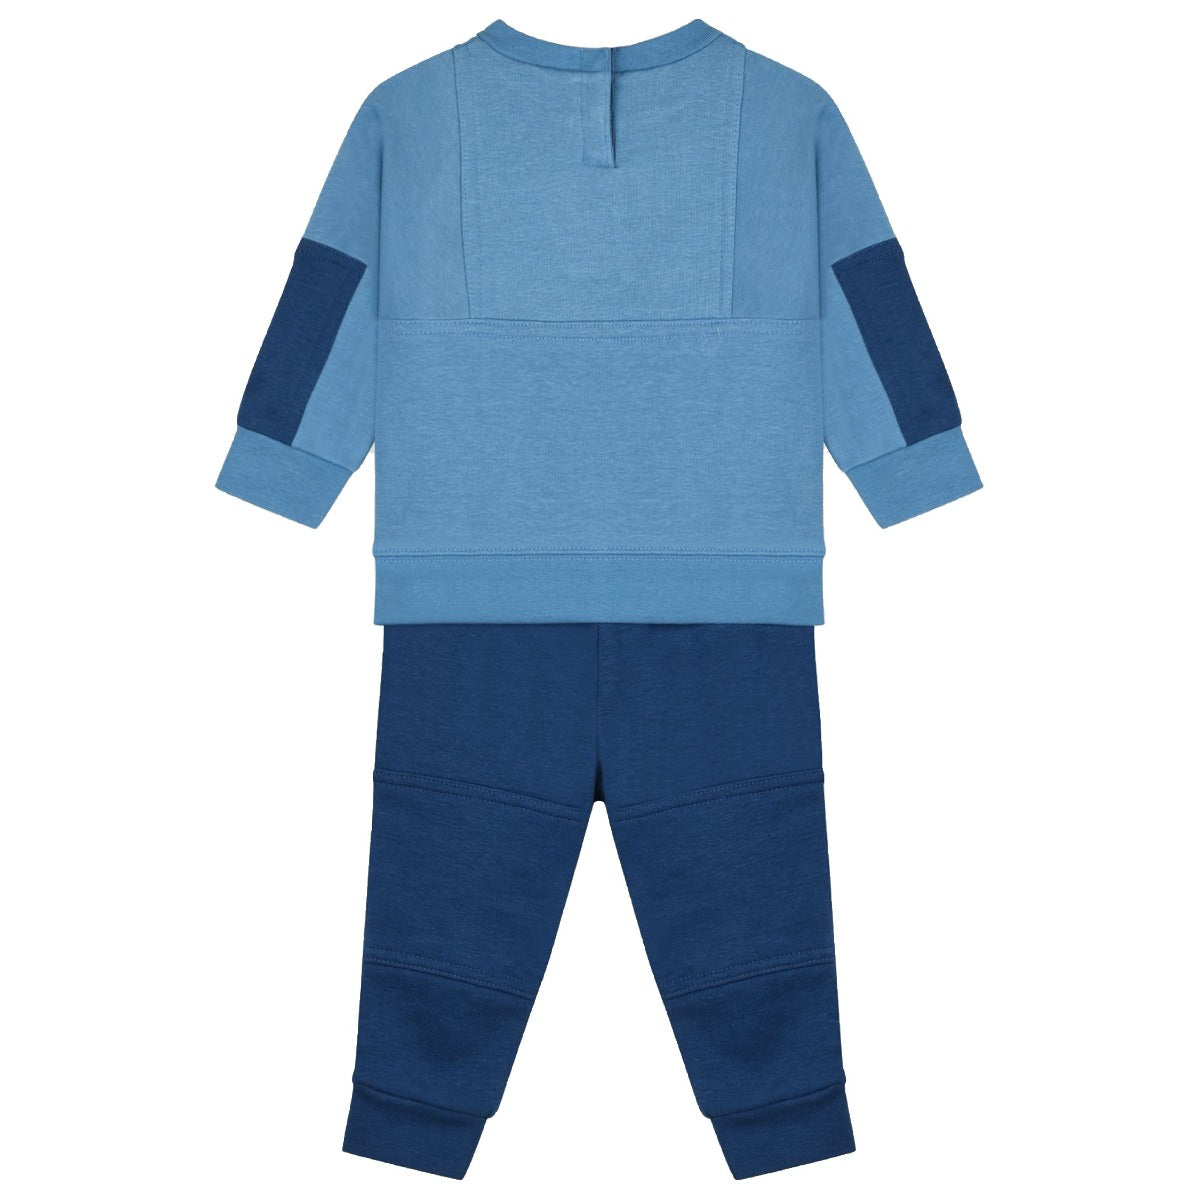 Nike Sportswear Kids Tracksuit Set - Blue/White